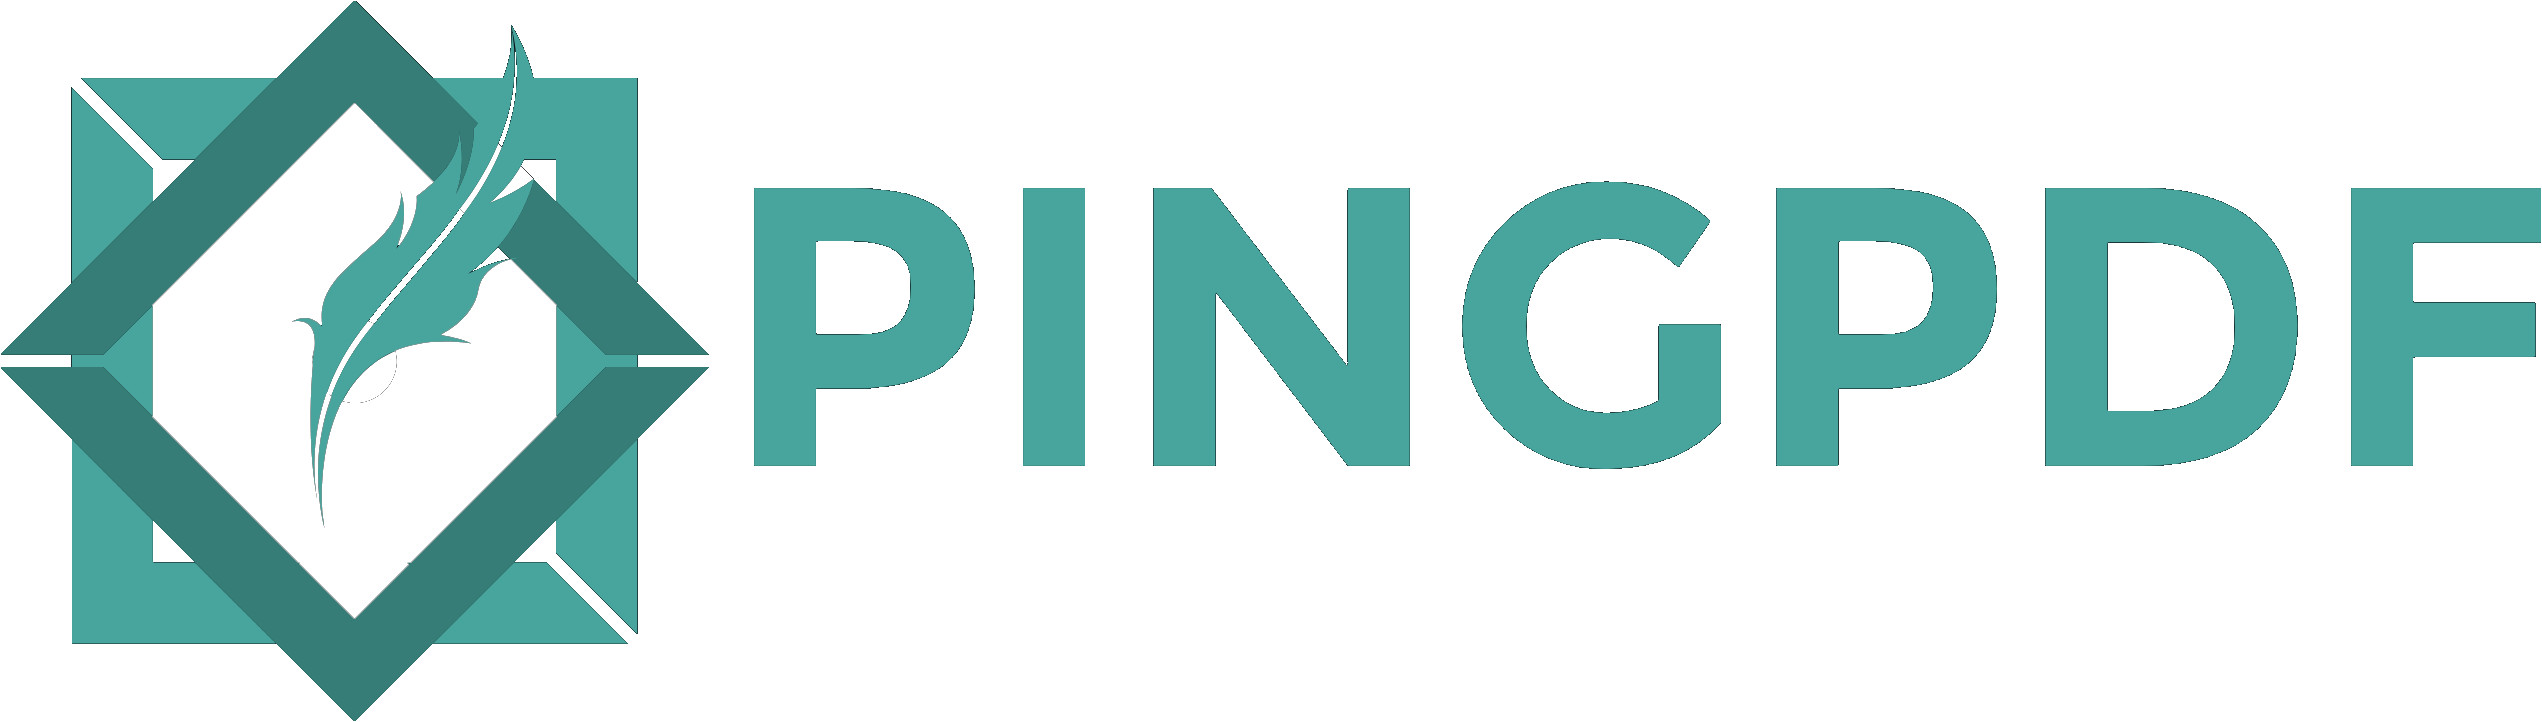 pingpdf logo png